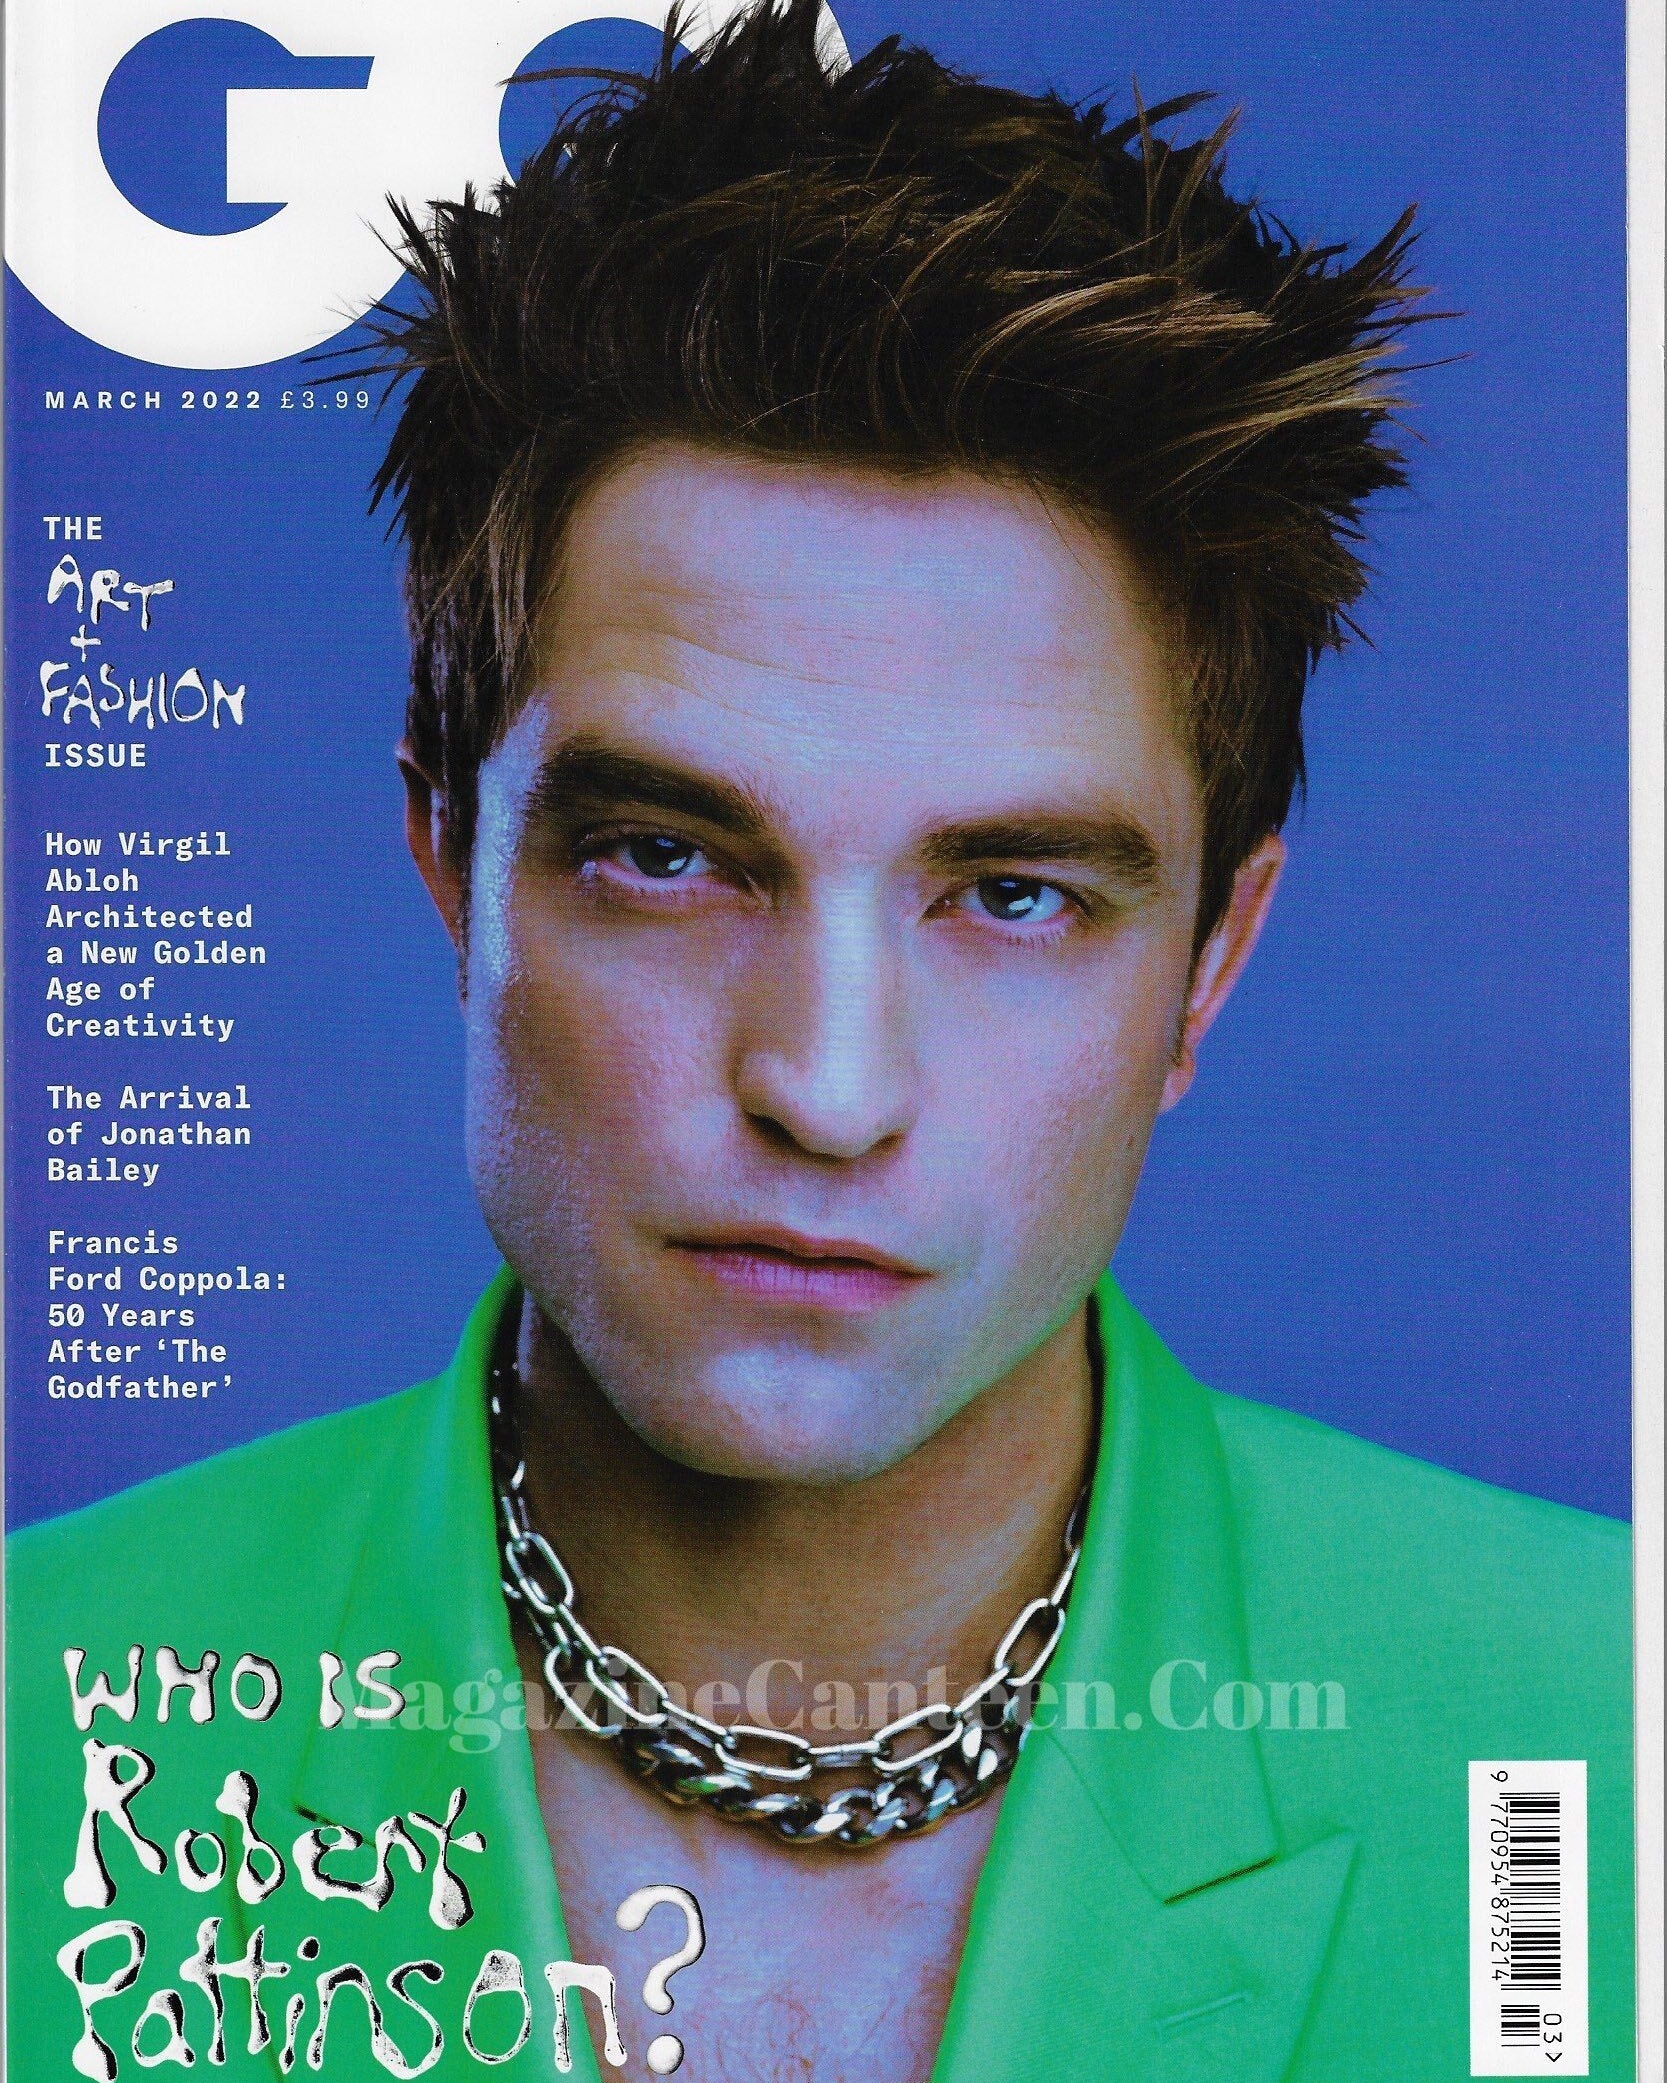 GQ Magazine March 2022 - Robert Pattinson A